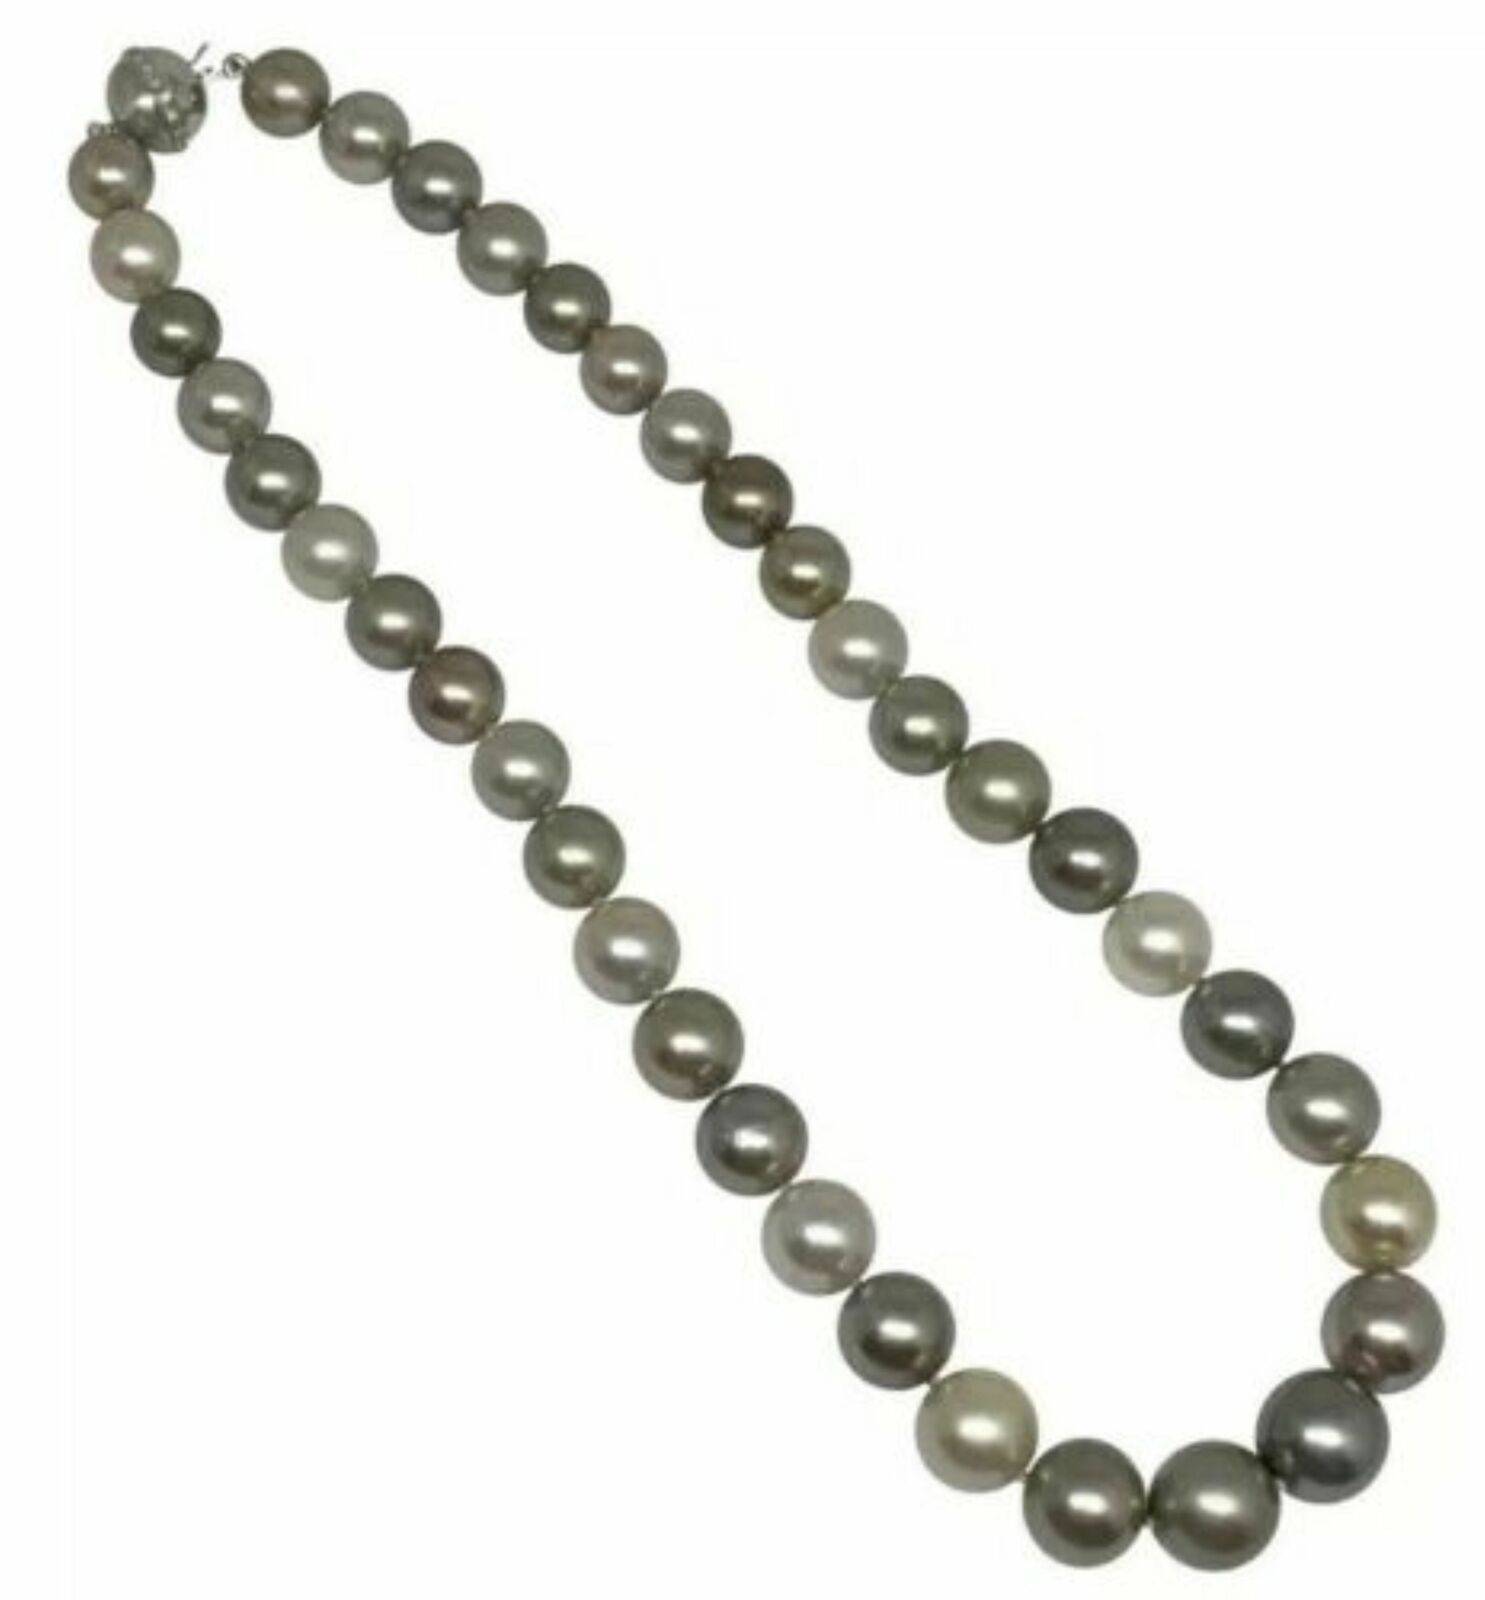 Diamond South Sea Pearl Necklace 14k Gold 11.46 mm 16.25" Certified $12,500 813013 - Certified Fine Jewelry